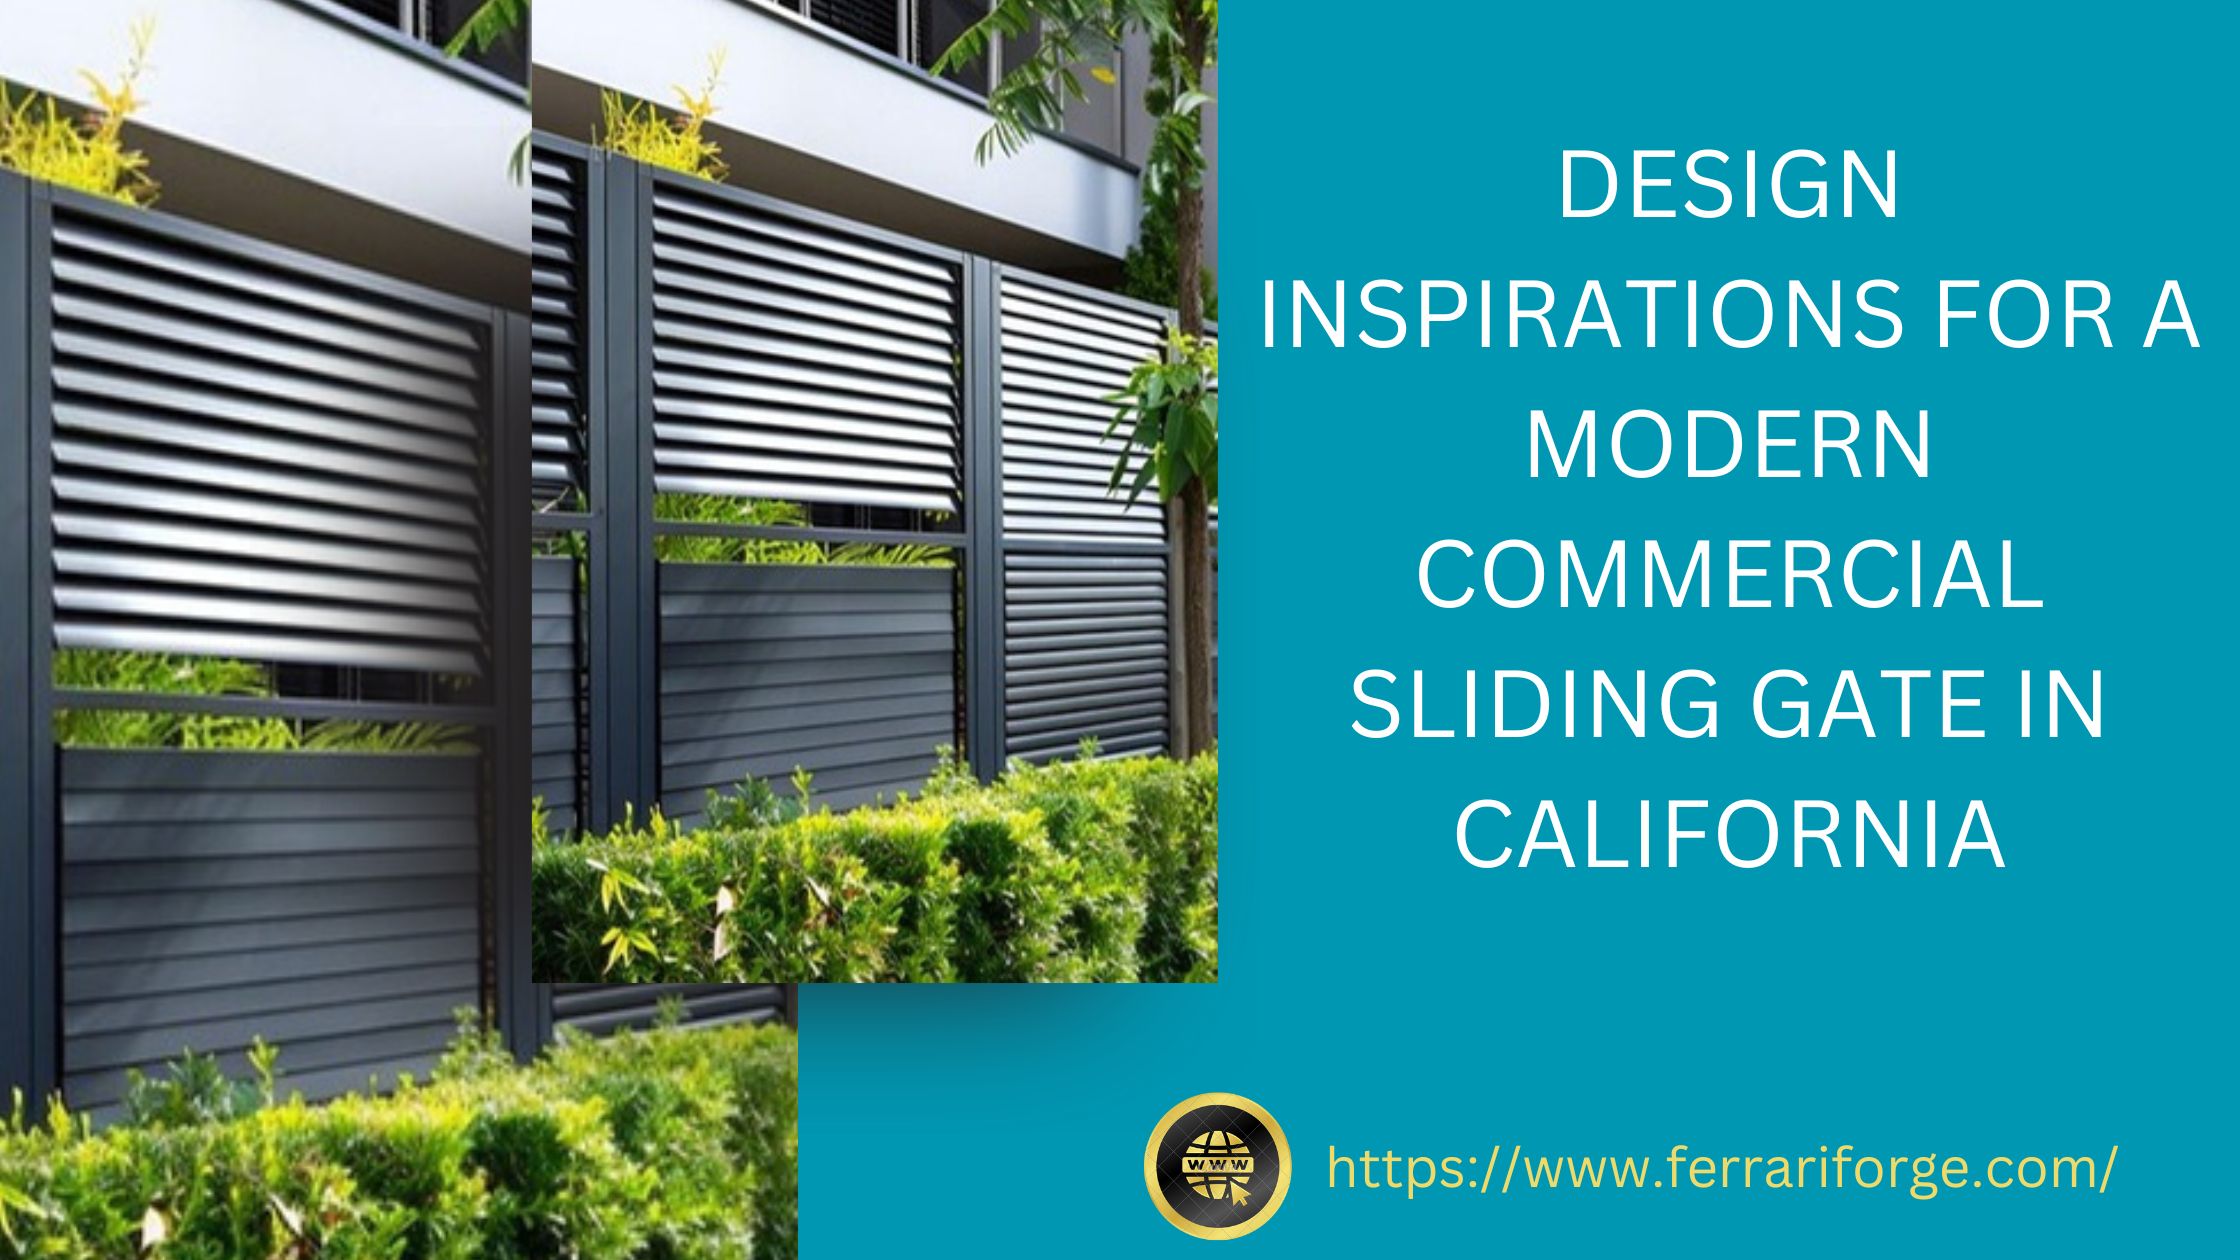 DESIGN INSPIRATIONS FOR A MODERN COMMERCIAL SLIDING GATE IN CALIFORNIA